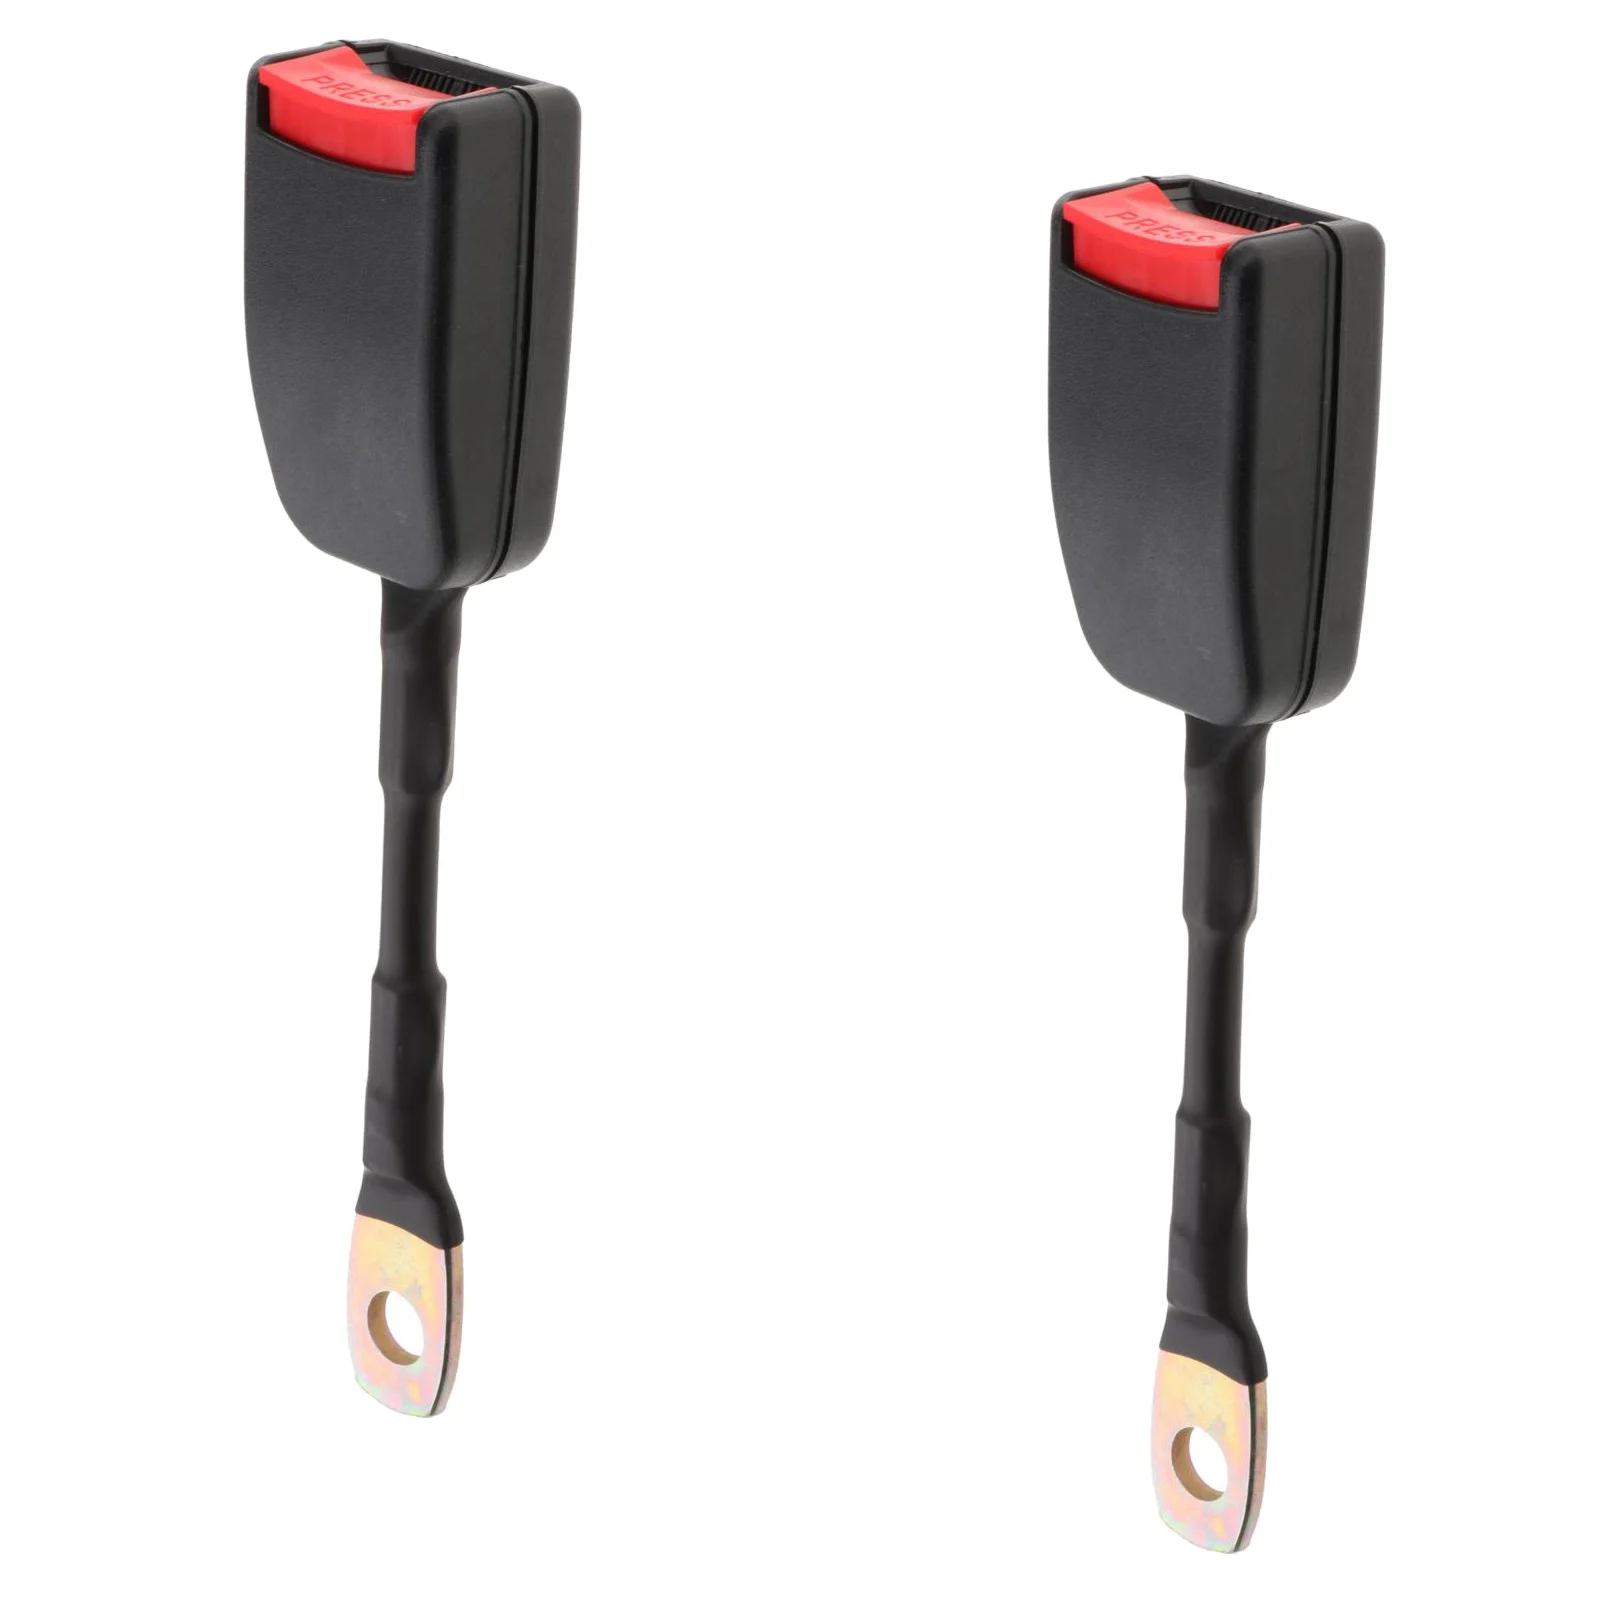 2x Universal Car Van Safety Seat Belt Buckle End Socket Connector 